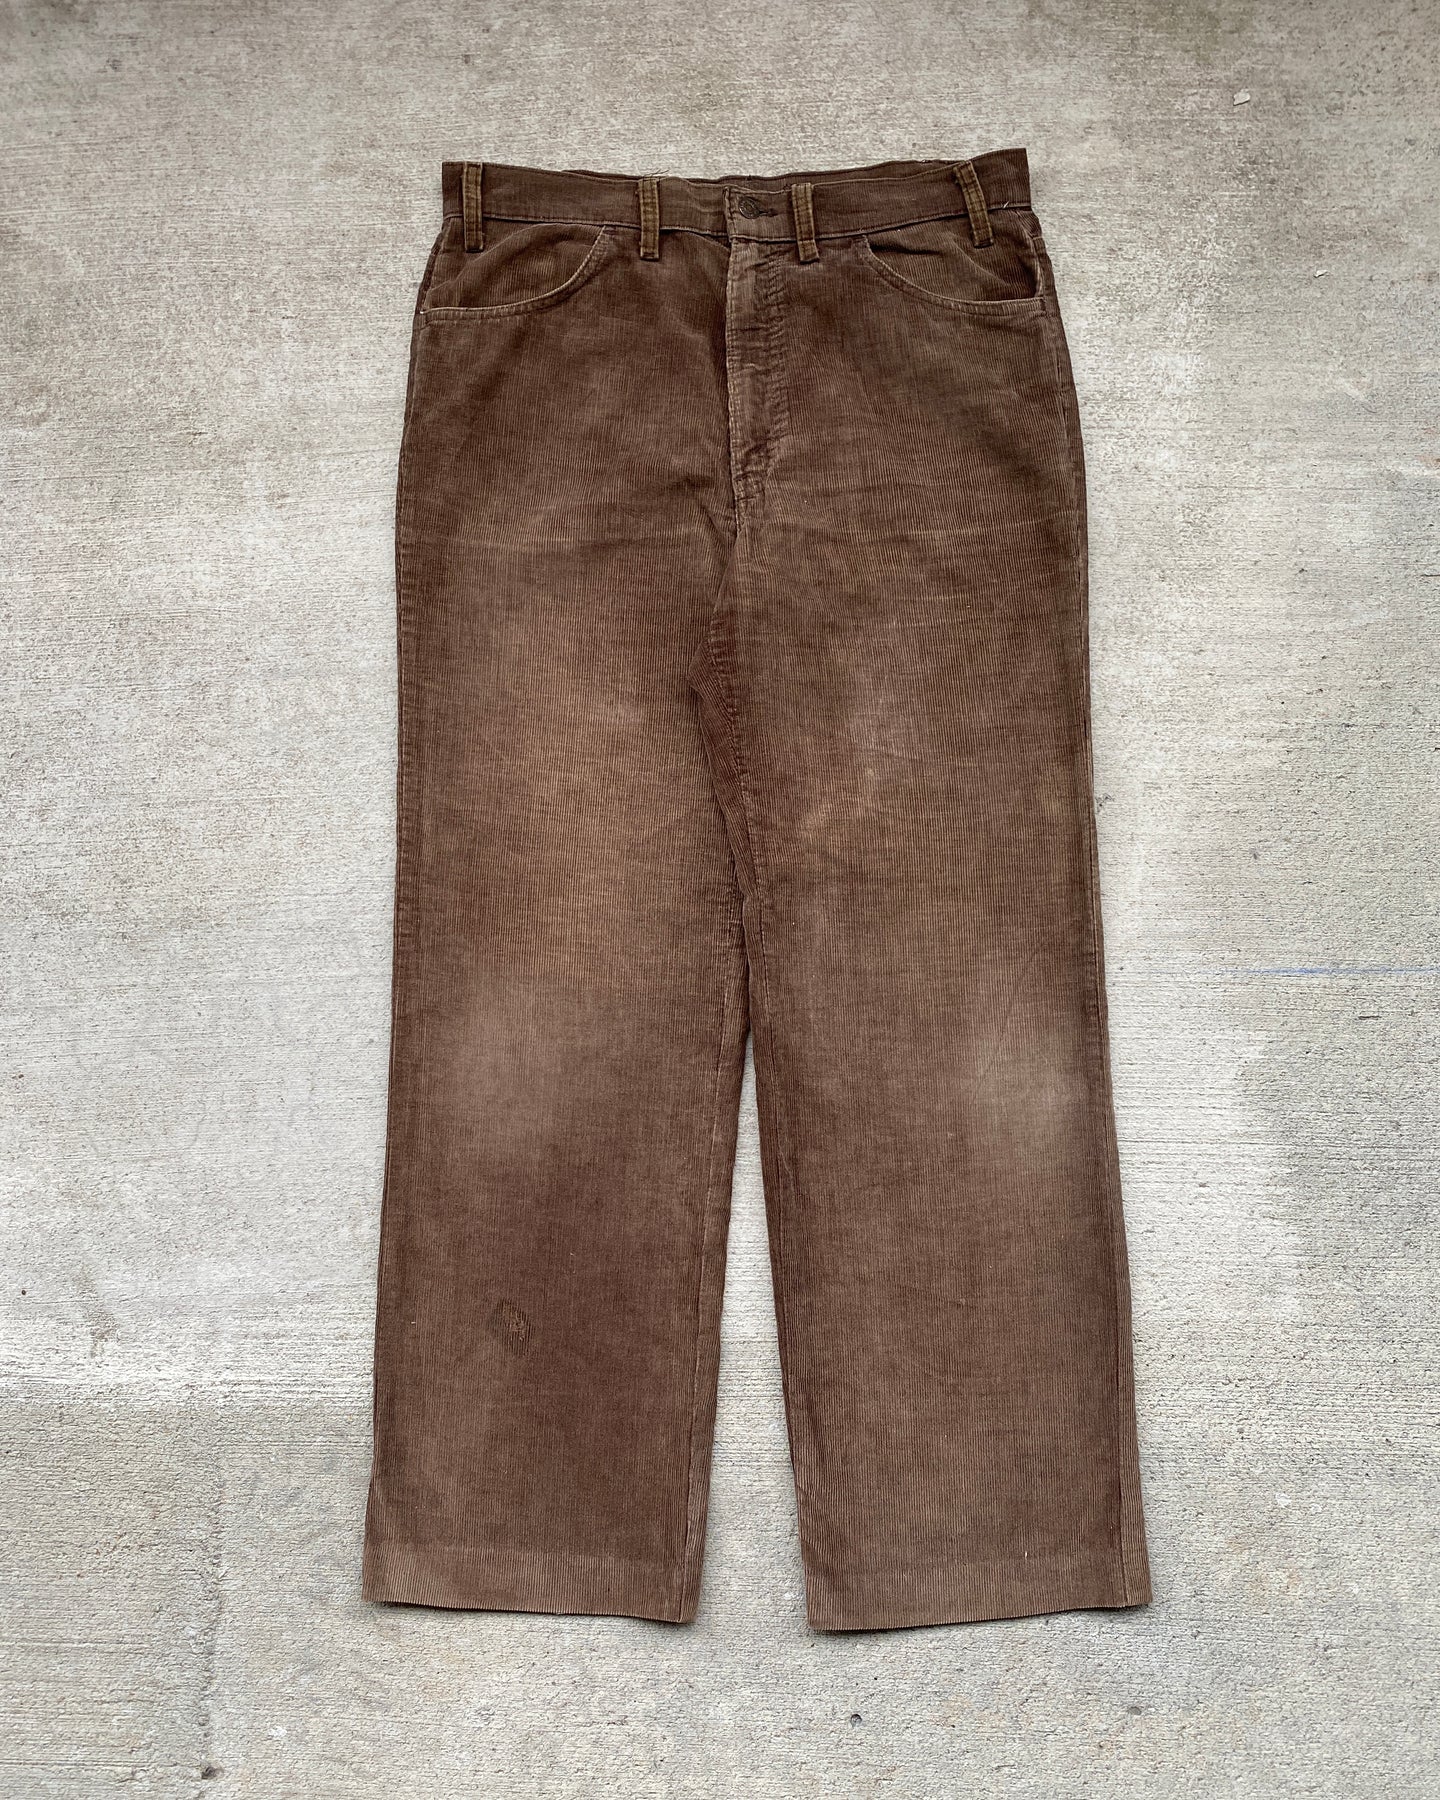 1970's Mocha Corduroy Pants with Talon Zip - Size 34 x 30